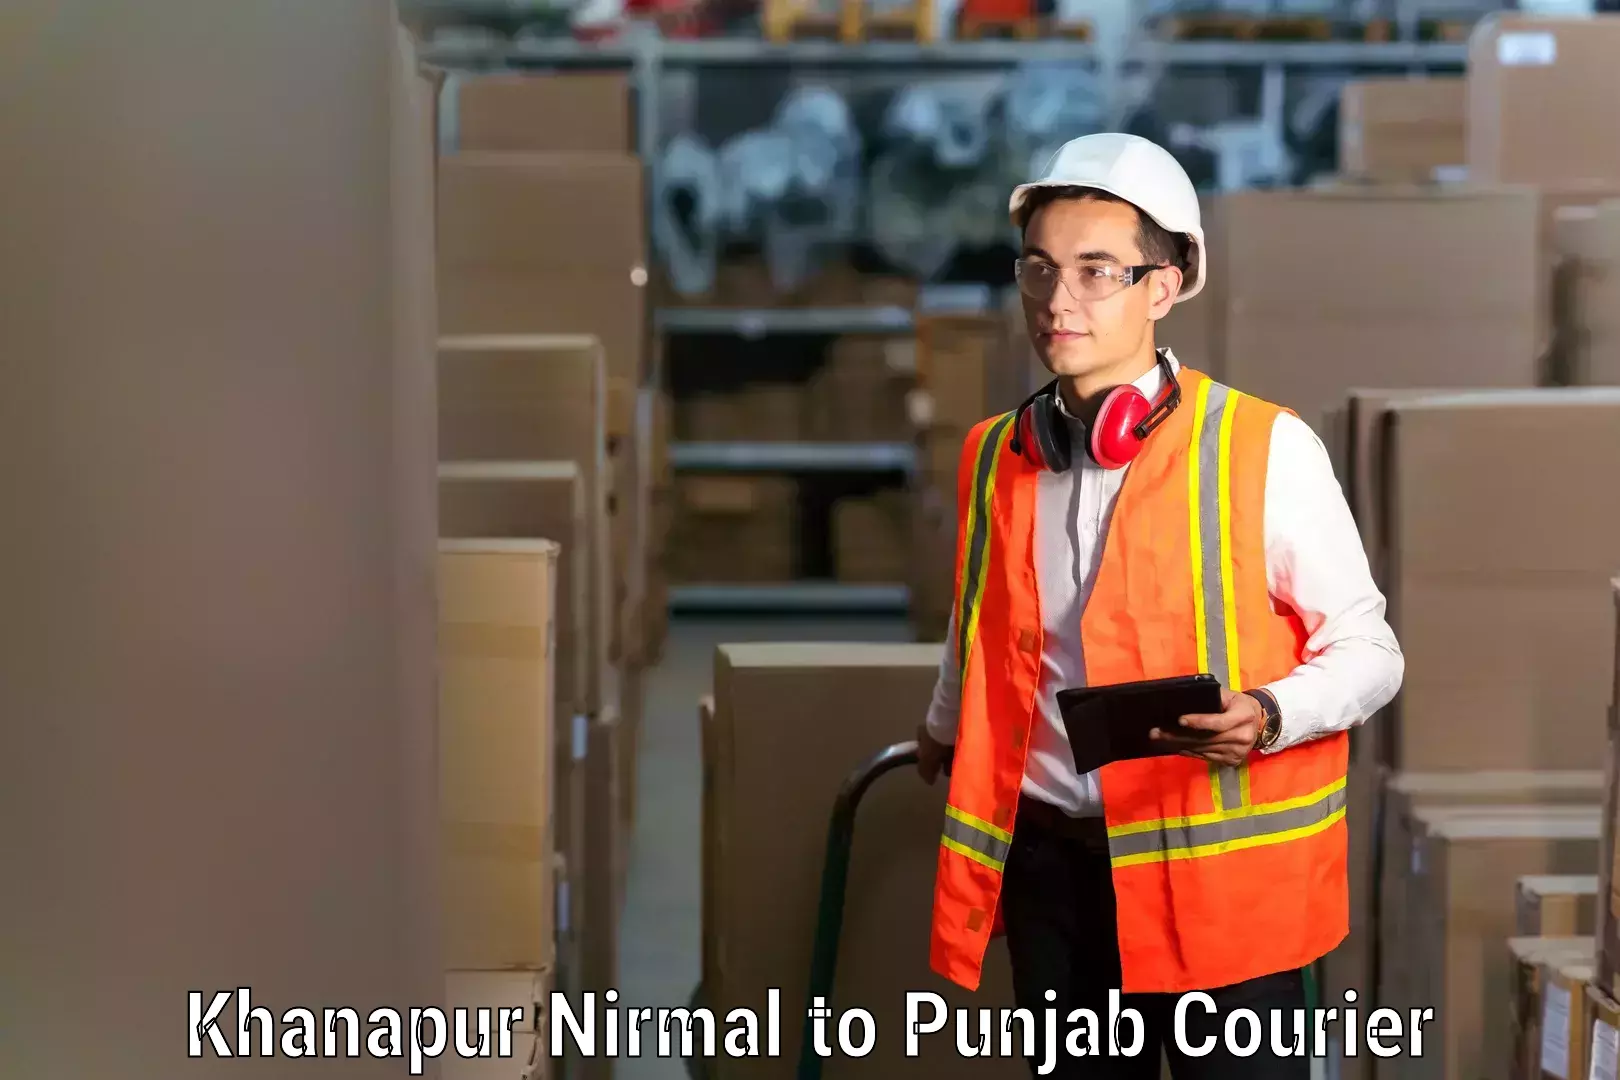 Furniture transport professionals Khanapur Nirmal to Amritsar